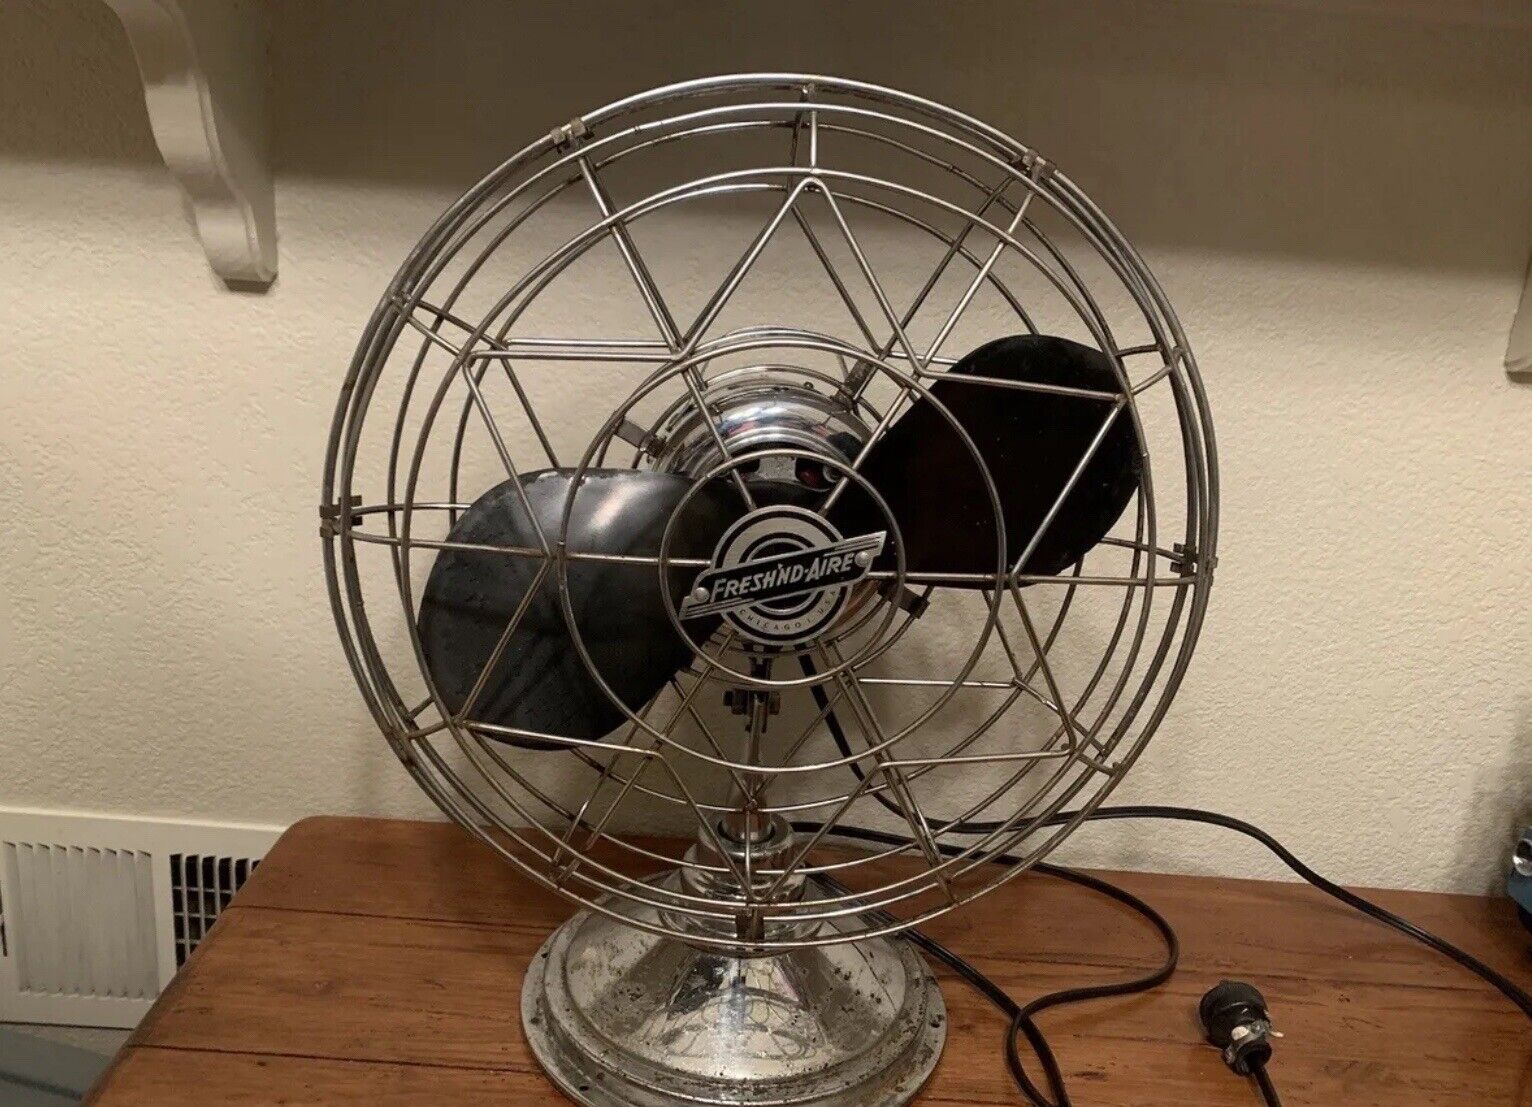 Vintage Freshnd Air Fan Model 14 Vintage Fan All Chrome